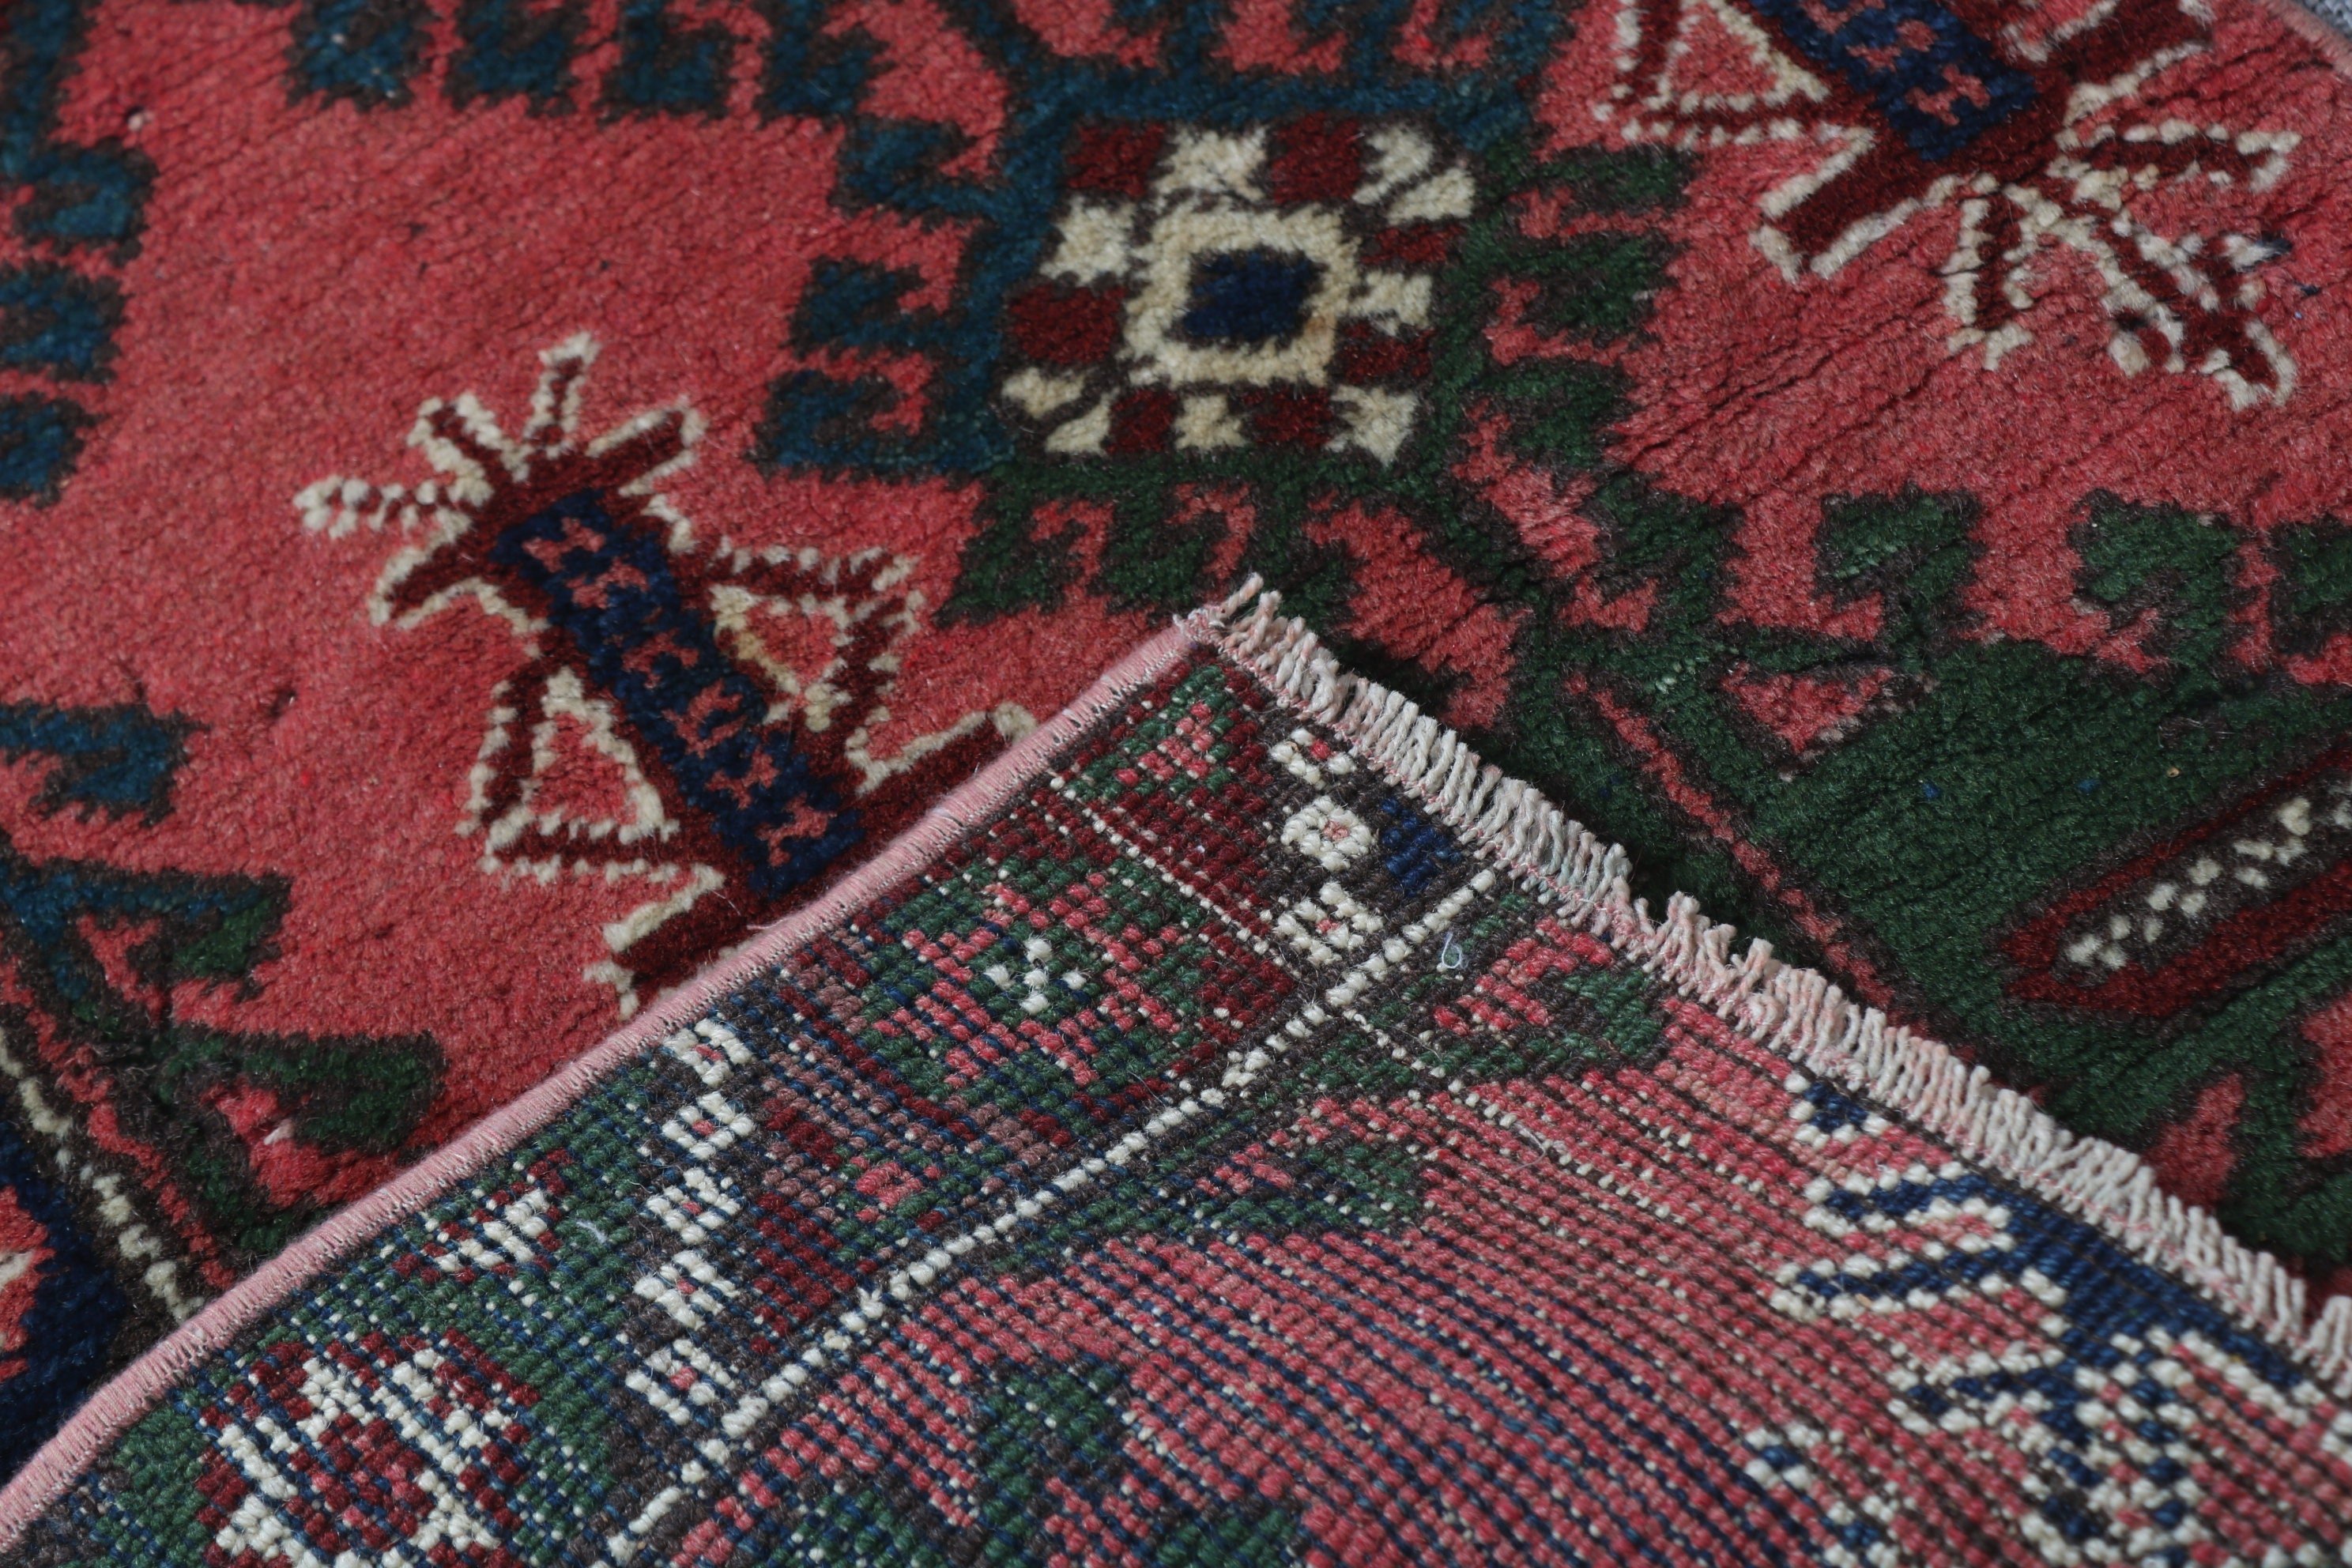 Turkish Rug, Wall Hanging Rug, Kitchen Rug, Bedroom Rug, Pink Moroccan Rug, Vintage Rug, Boho Rug, Home Decor Rugs, 1.7x2 ft Small Rug